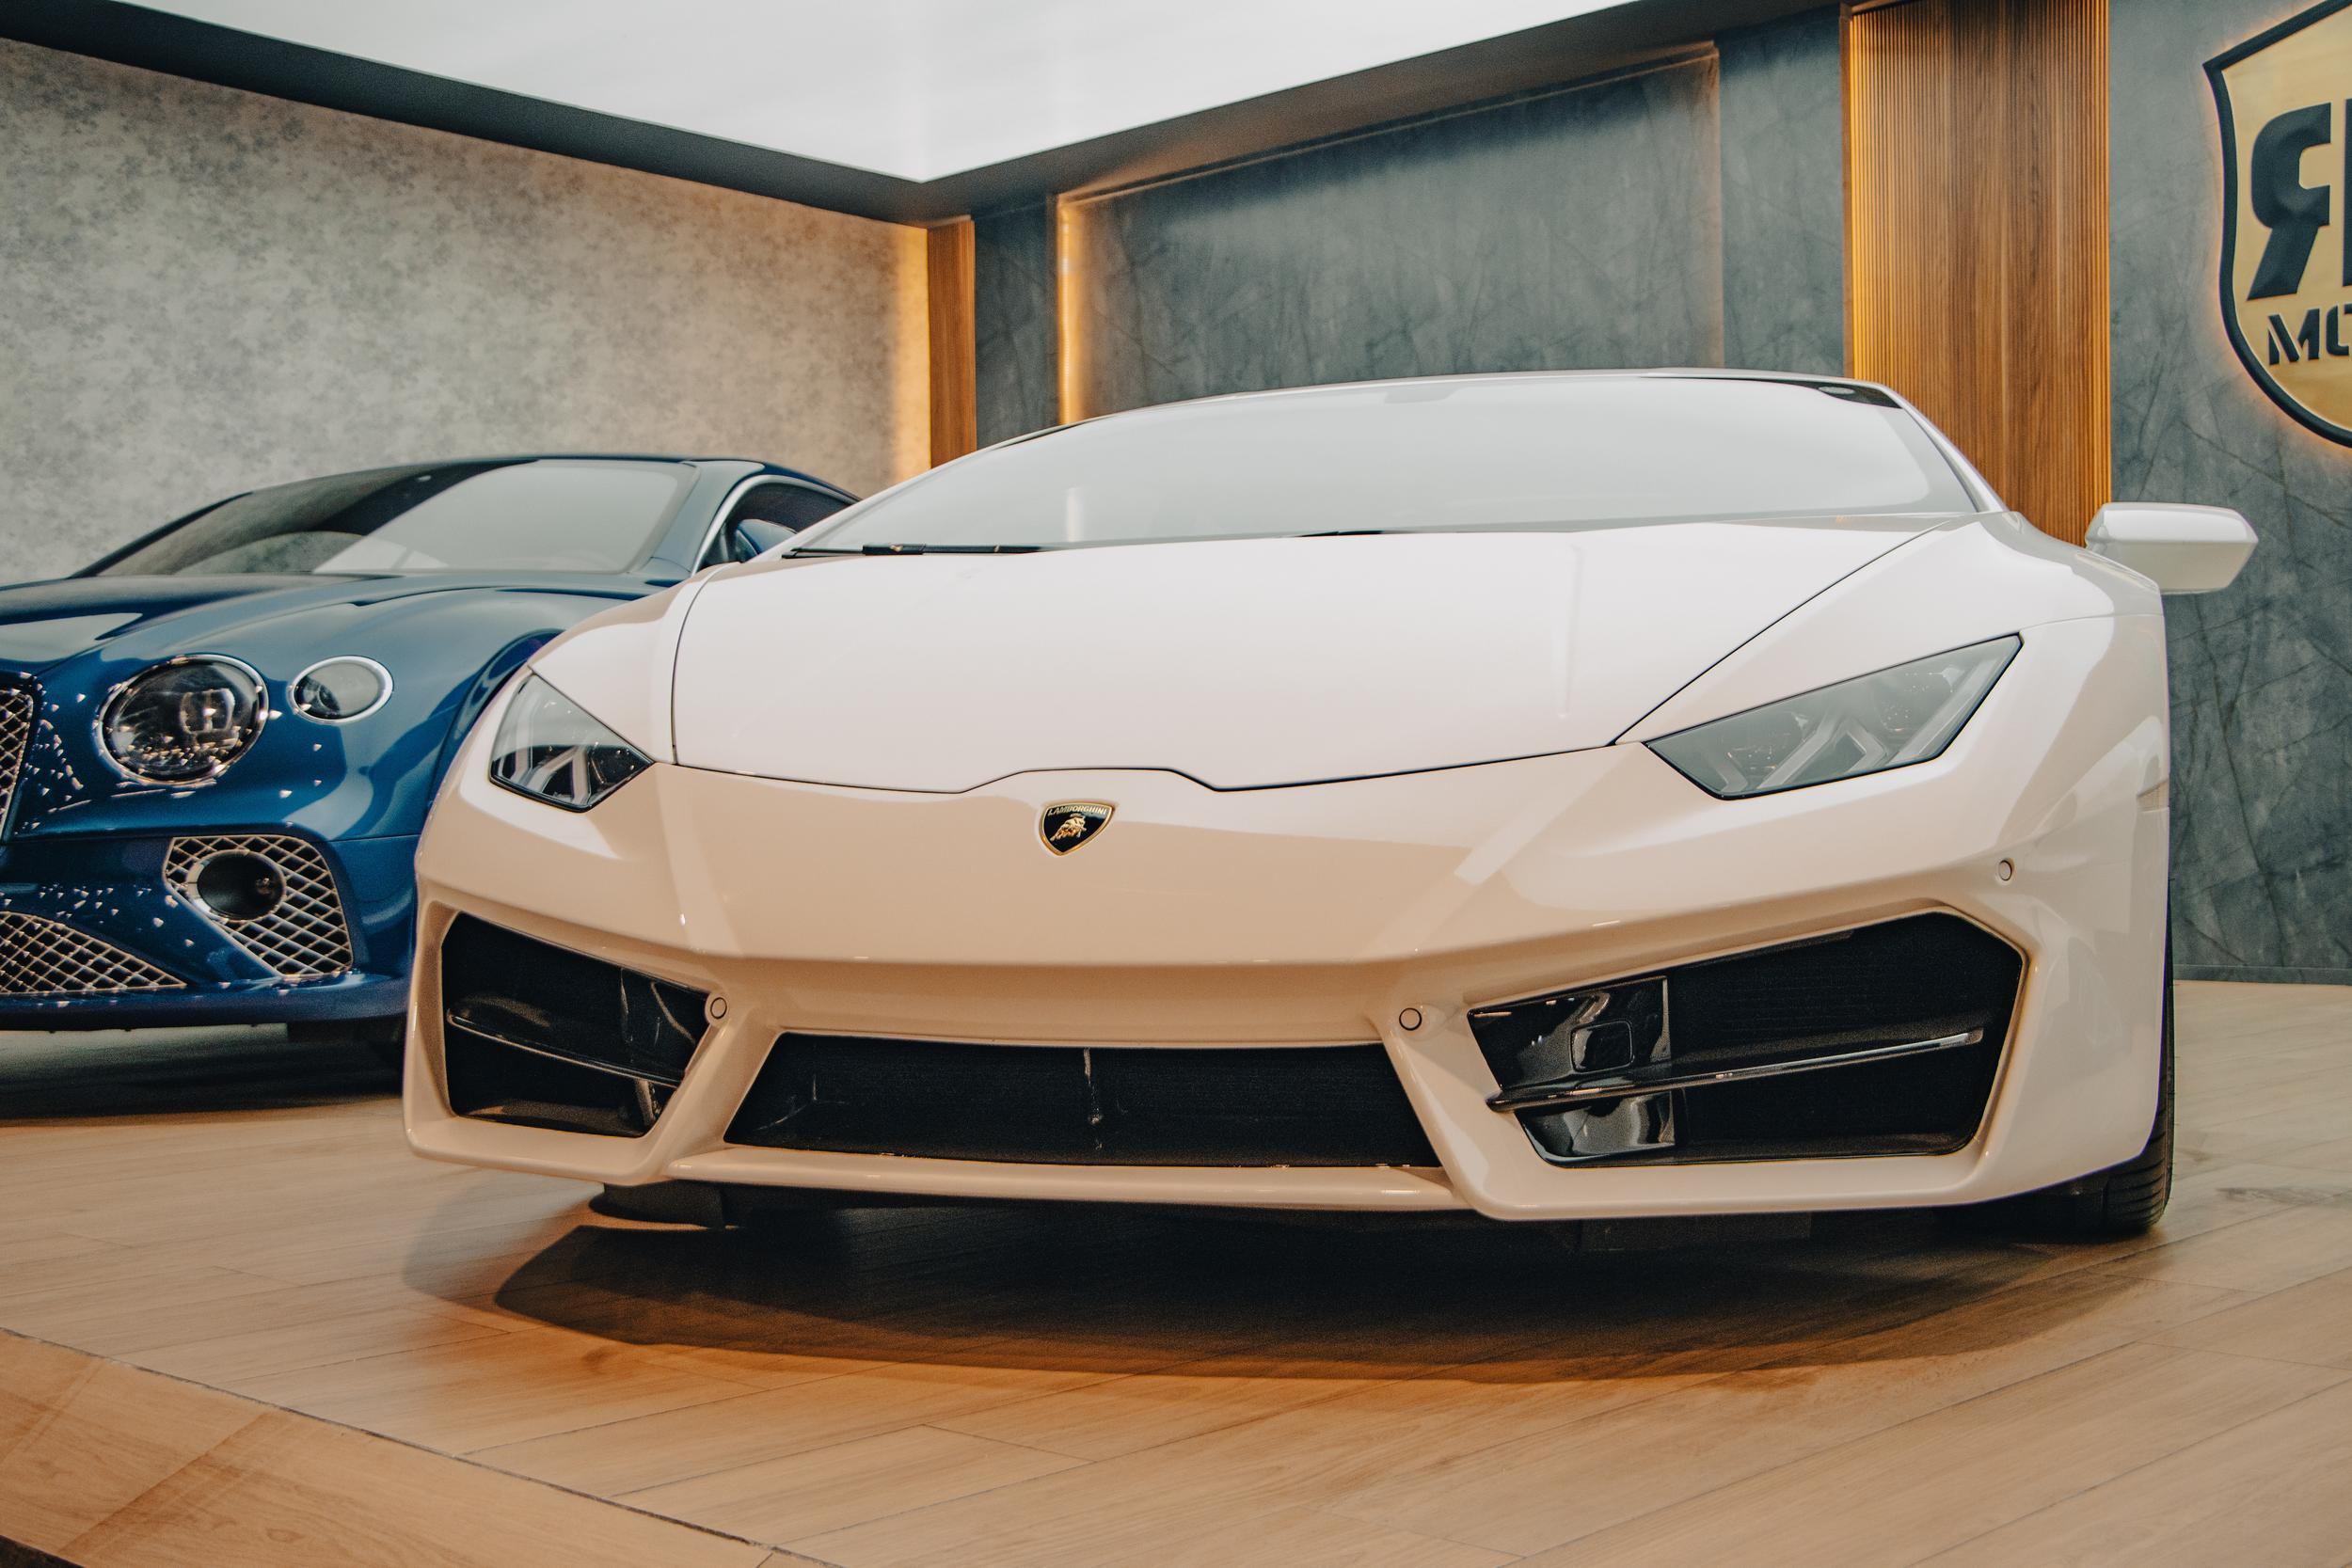 Lamborghini dealership policies